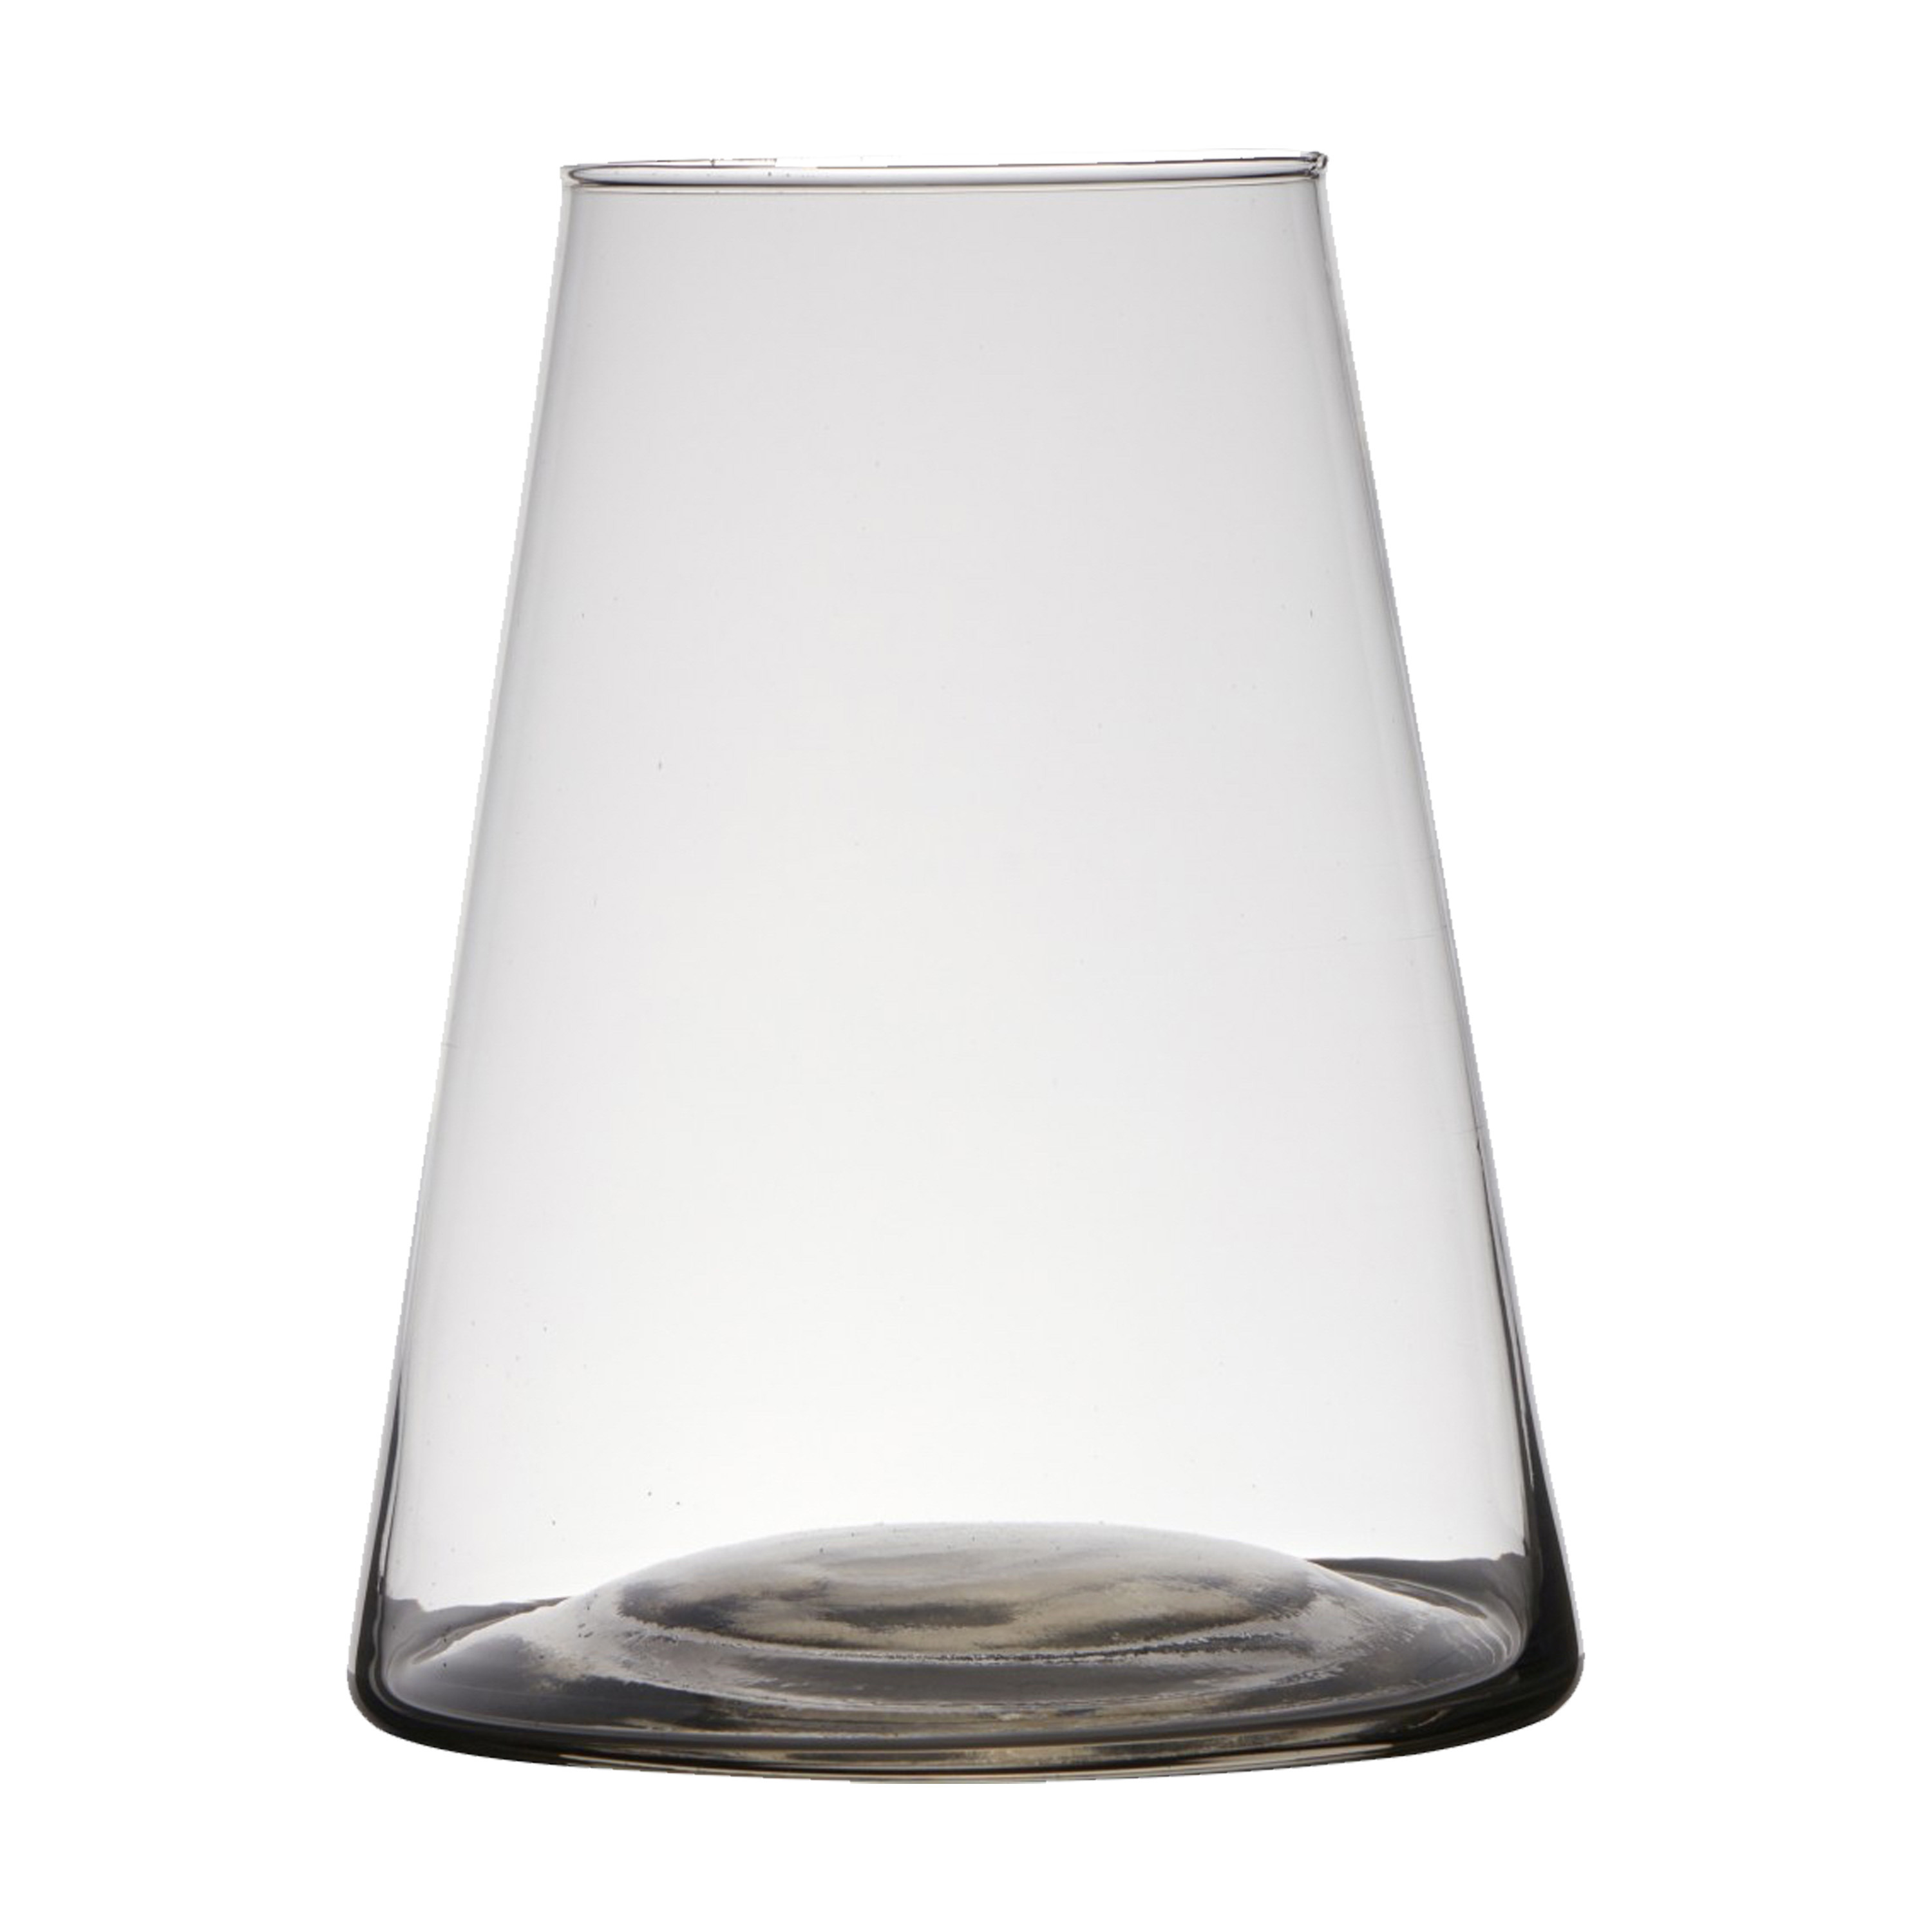 Hakbijl Glass Bloemenvaas Donna transparant eco glas D17 x H24 cm home-basics vaas